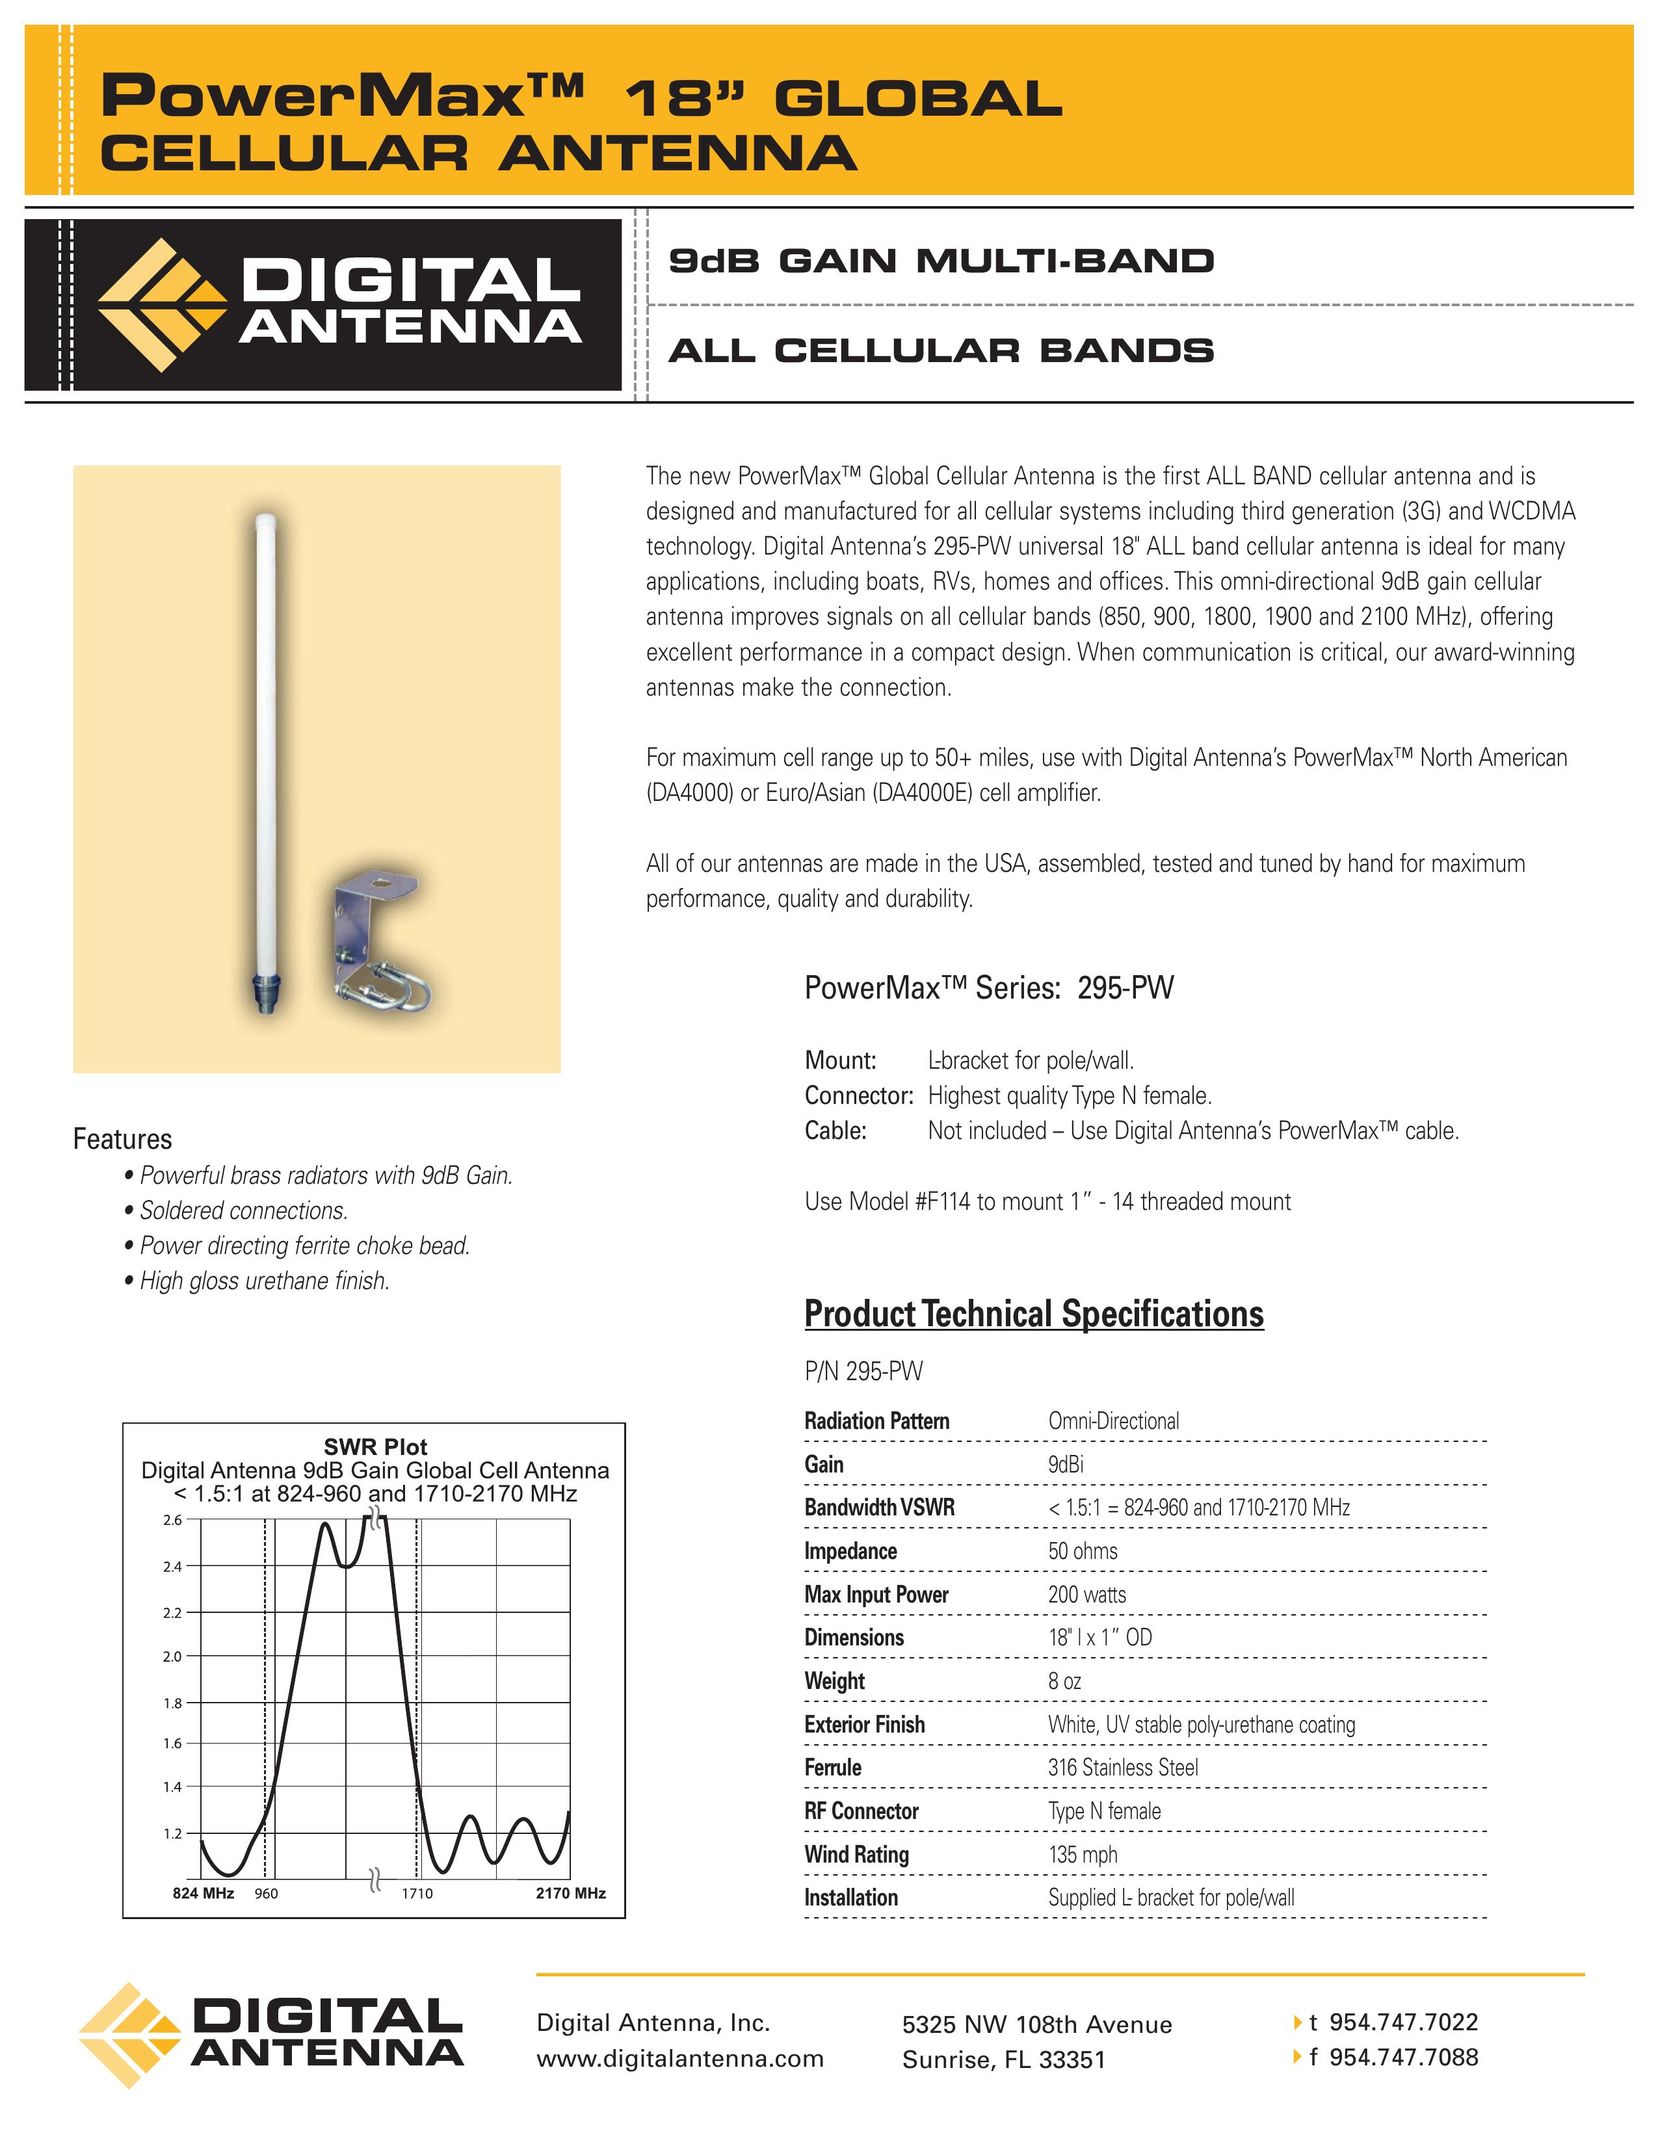 Digital Antenna PowerMaxTM 18" Stereo System User Manual